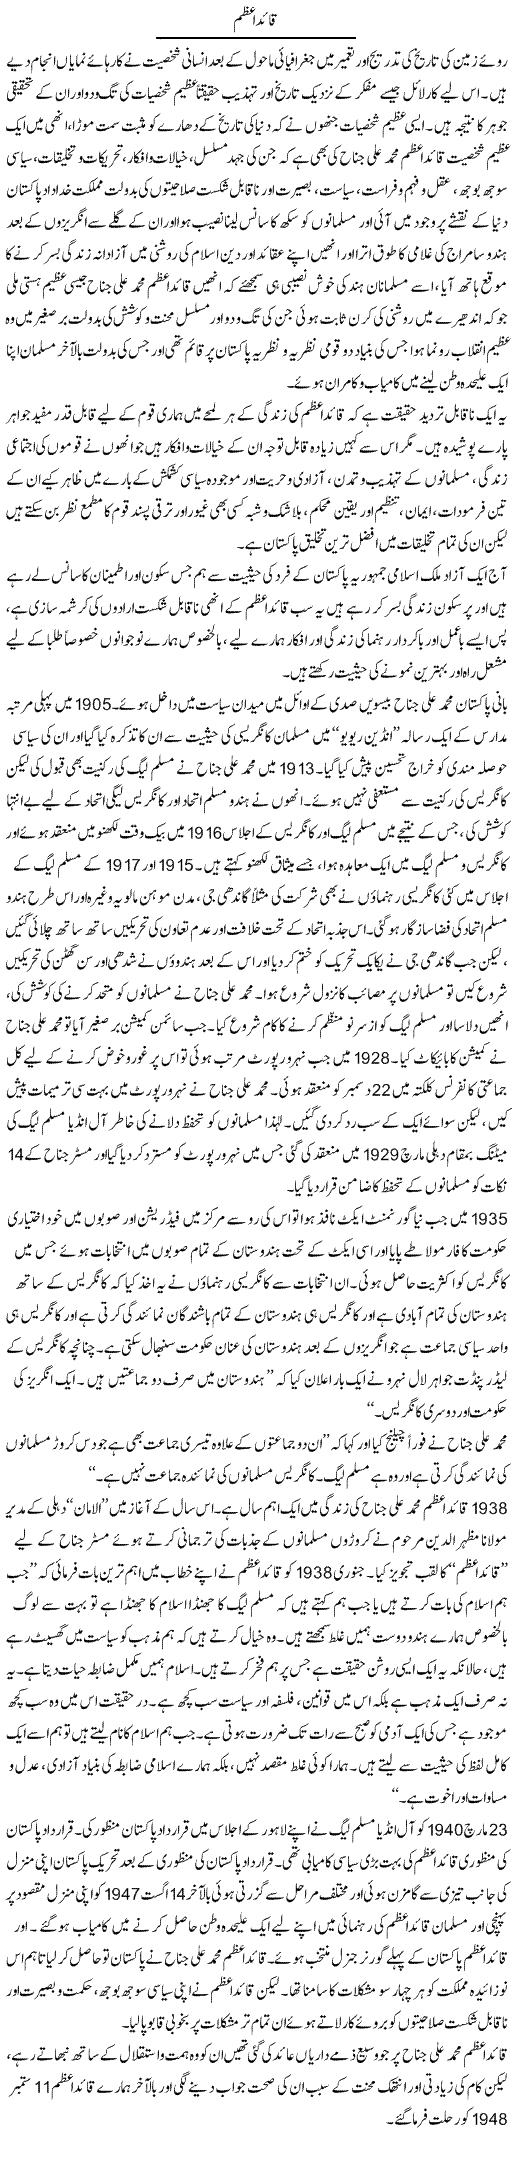 Quaid Azam | Dr. Muhammad Tayyab Khan Singhanvi | Daily Urdu Columns